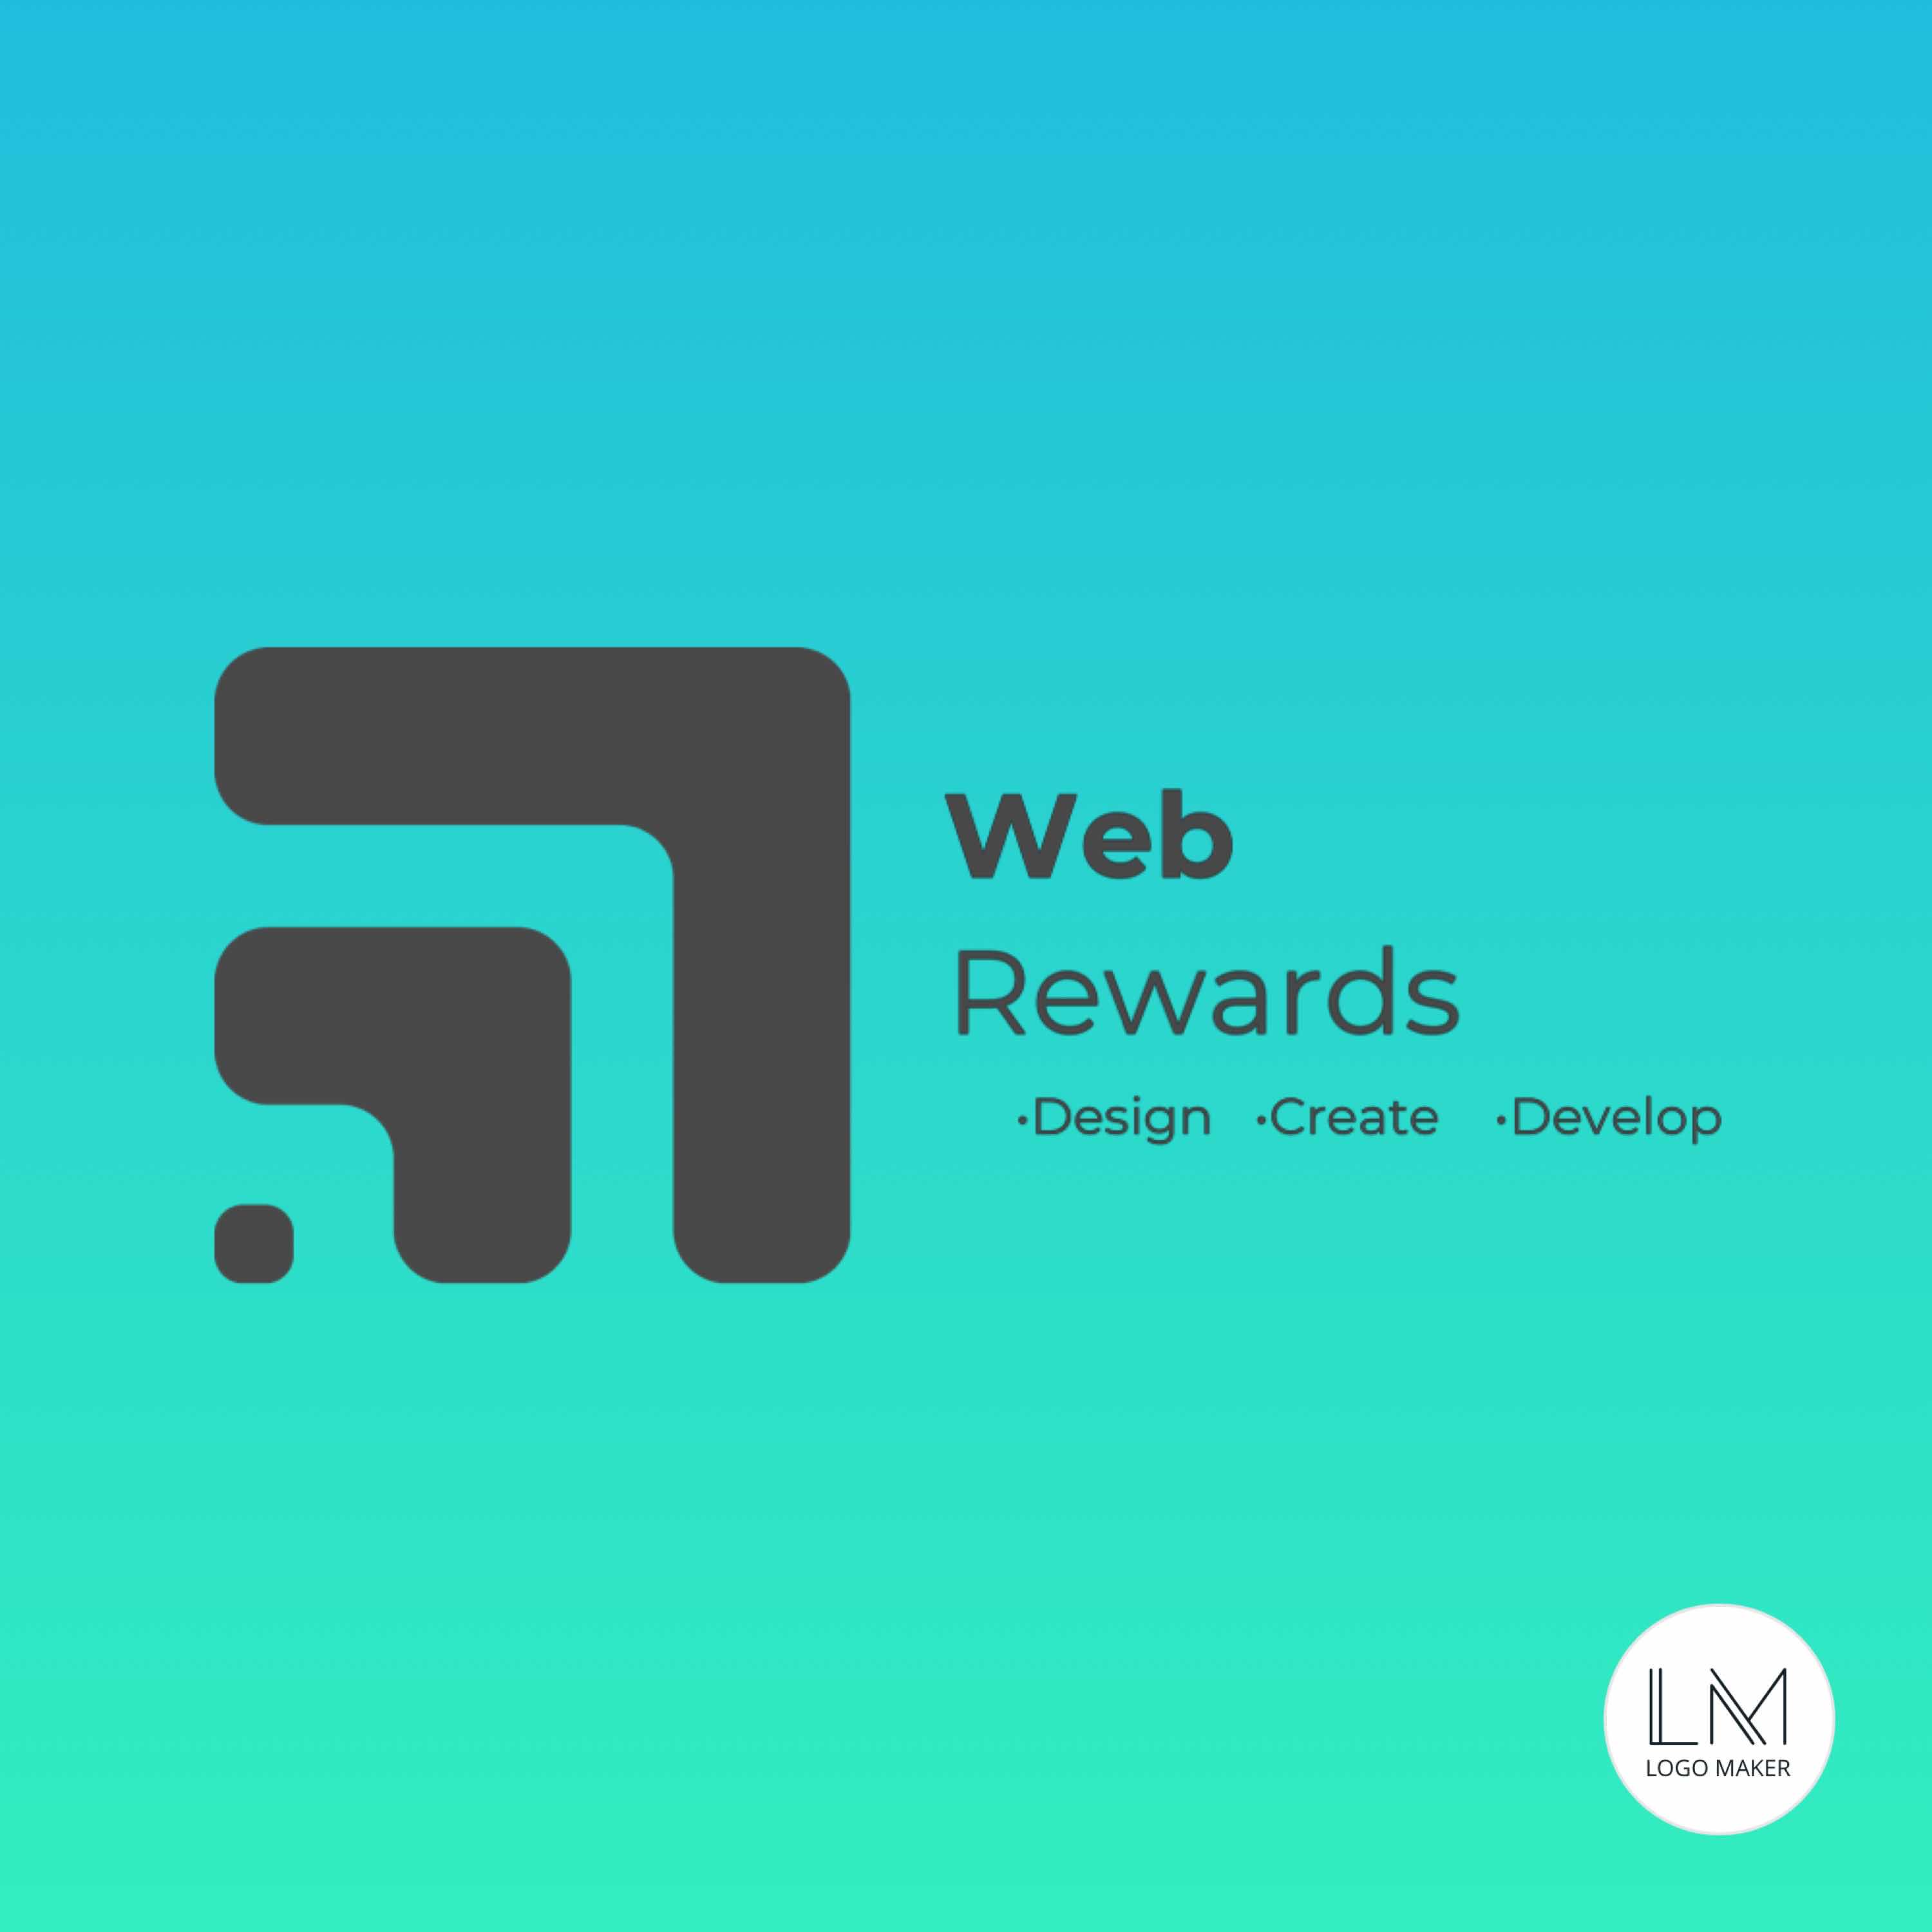 Web Rewards